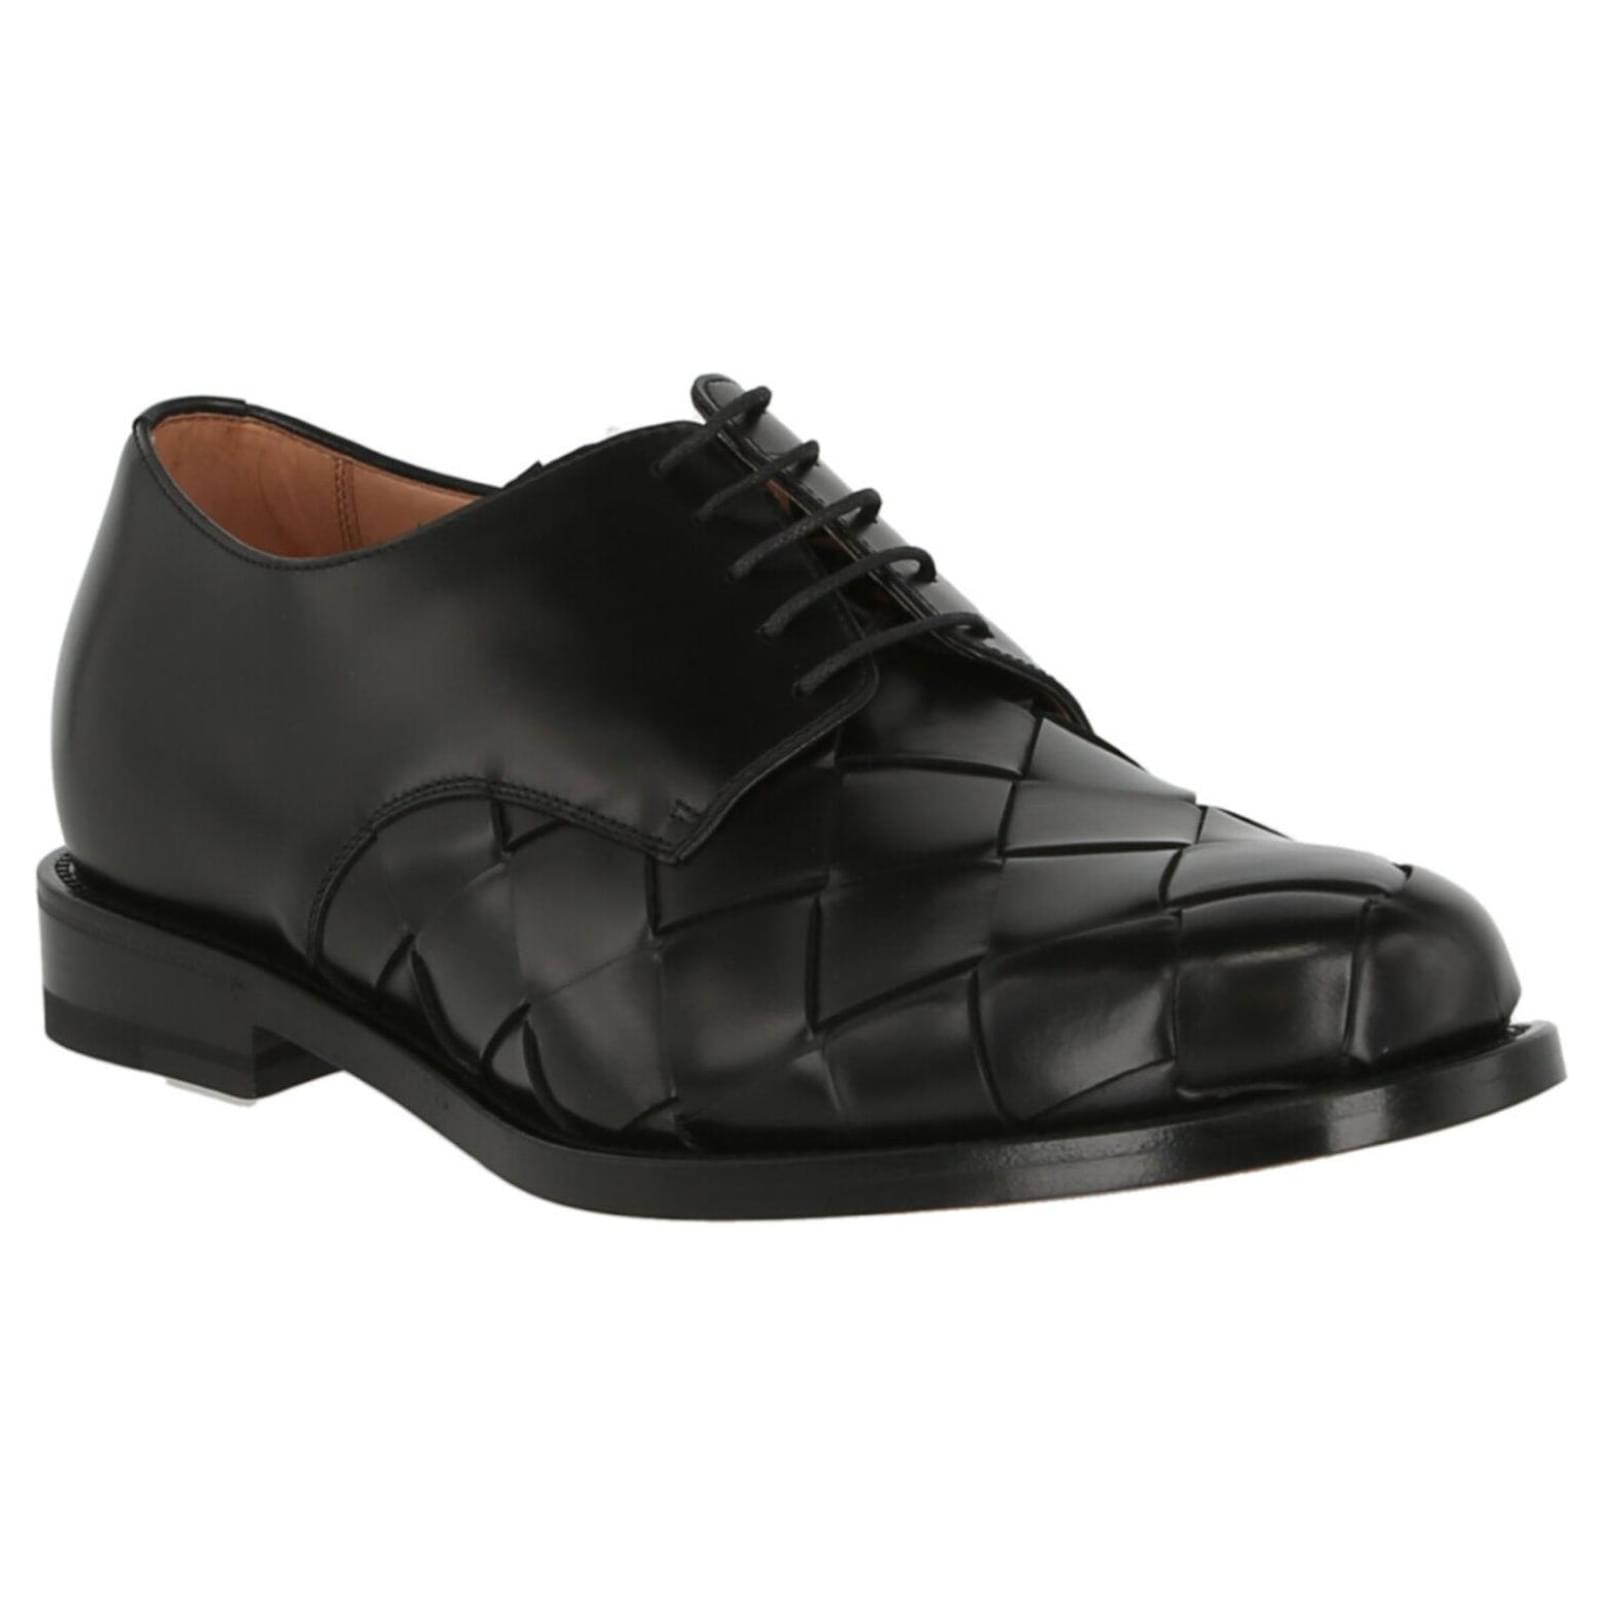 Black Intrecciato-leather Derby shoes, Bottega Veneta